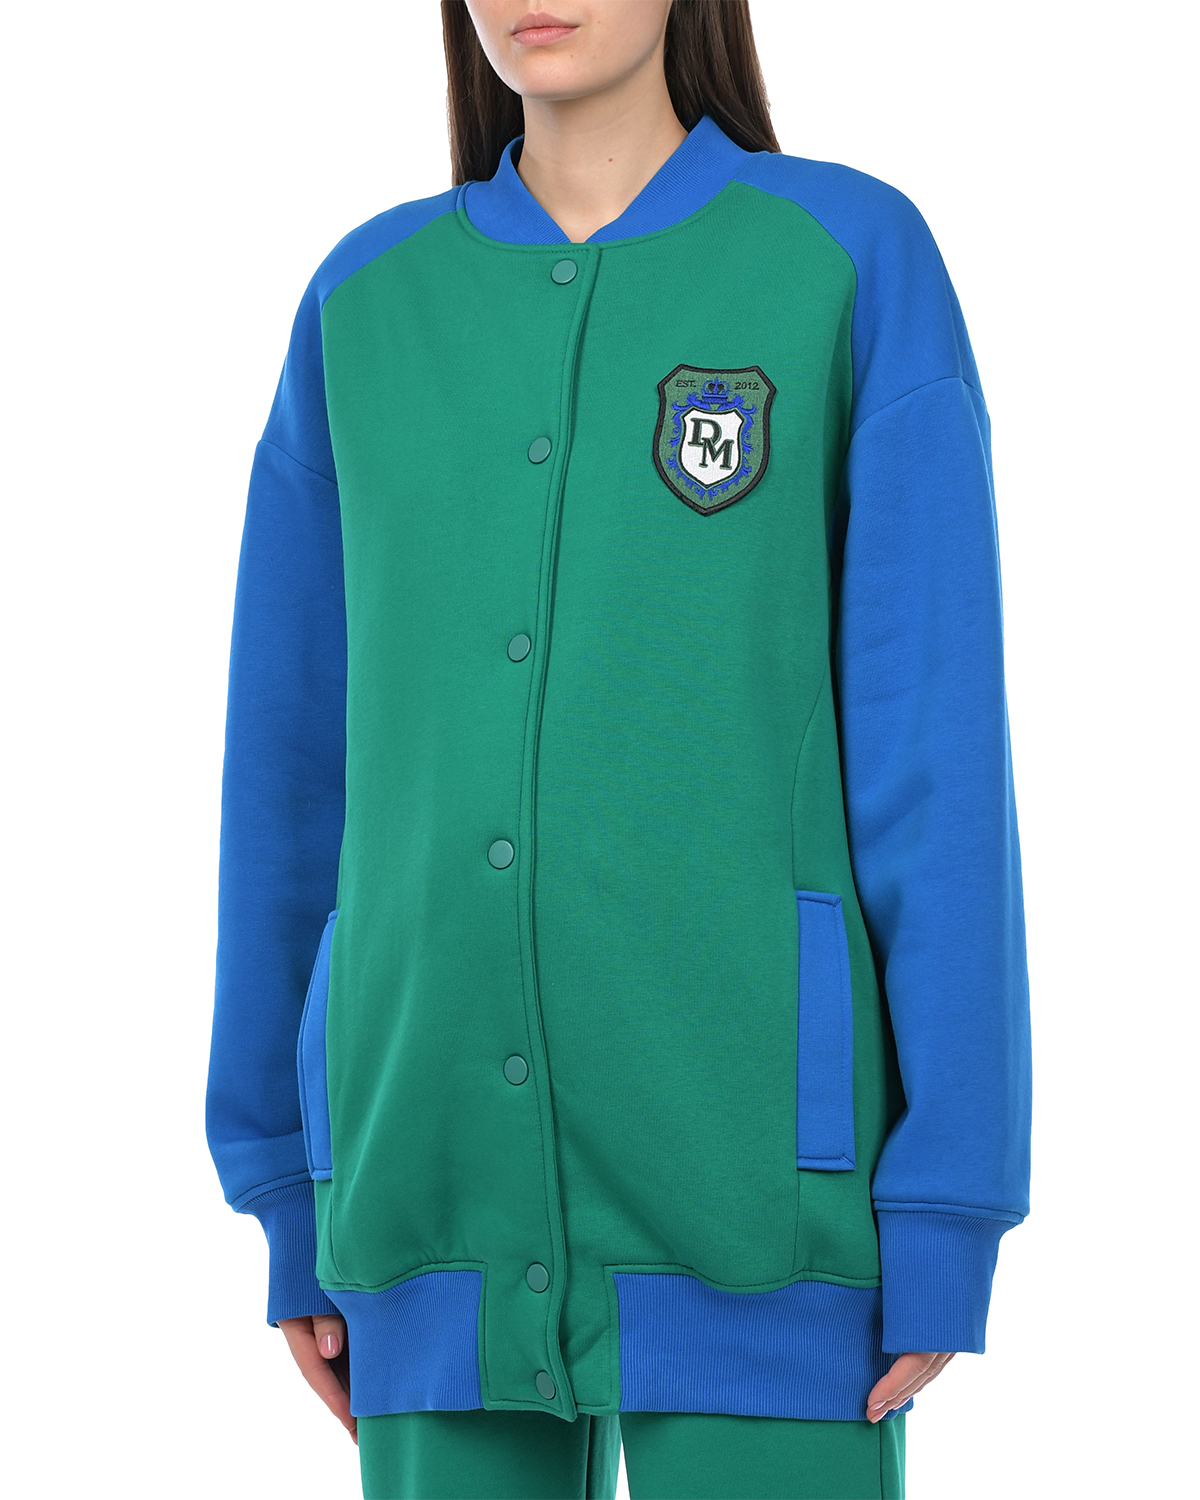 Сине-зеленая куртка-бомбер Dan Maralex, размер 42, цвет мультиколор - фото 6